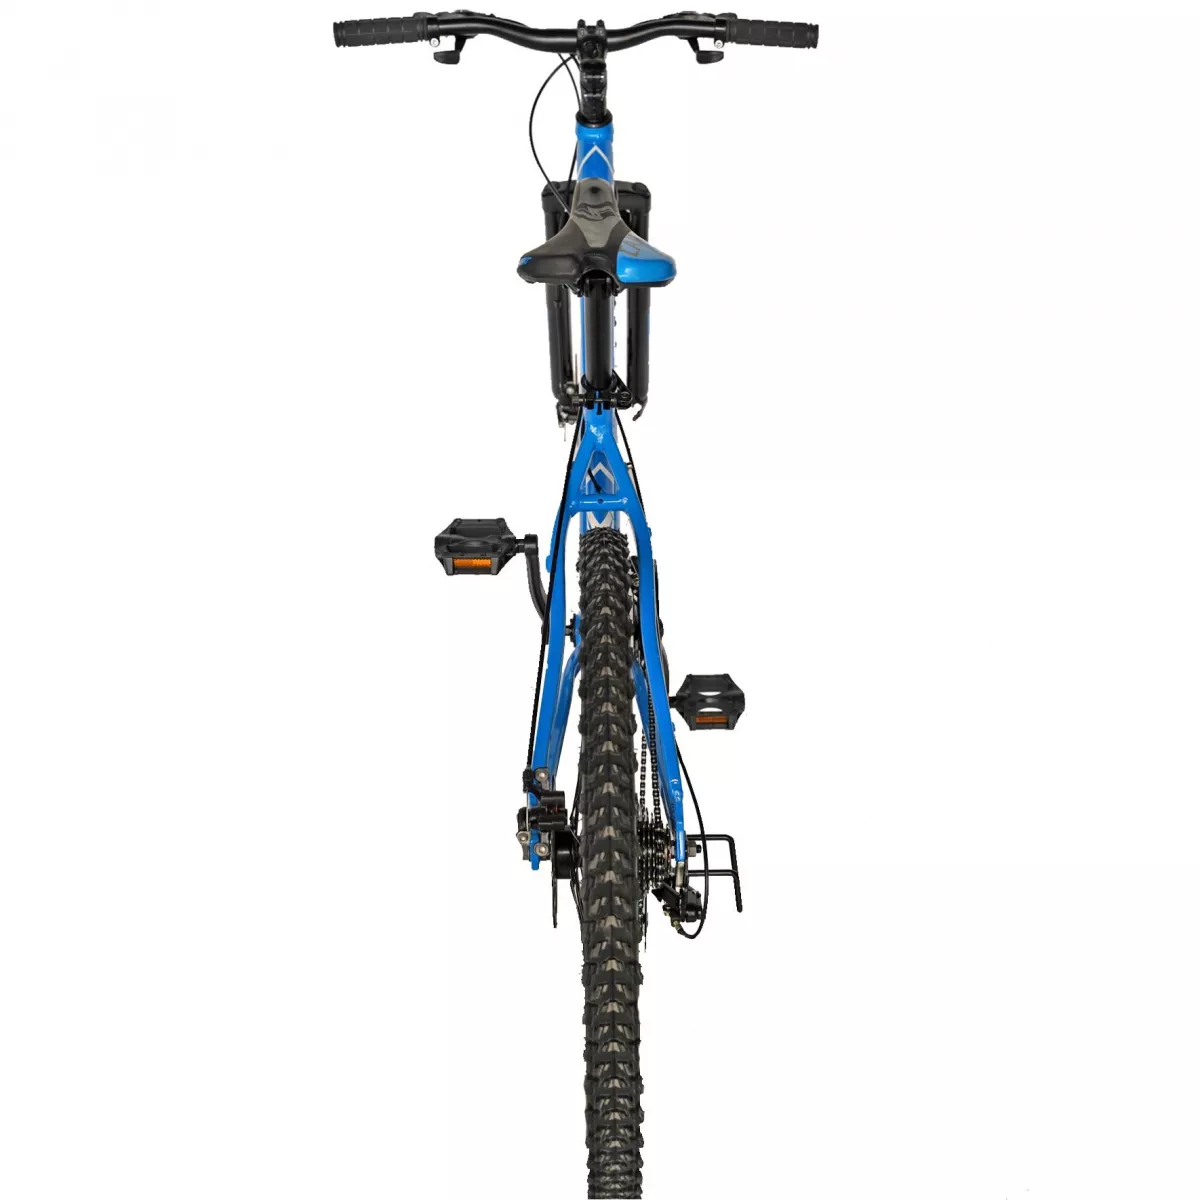 Bicicleta MTB-HT  26" CARPAT Spartan C2658C, cadru aluminiu, frane mecanice disc, transmisie  21 viteze, culoare  albastru/alb  - RESIGILATA